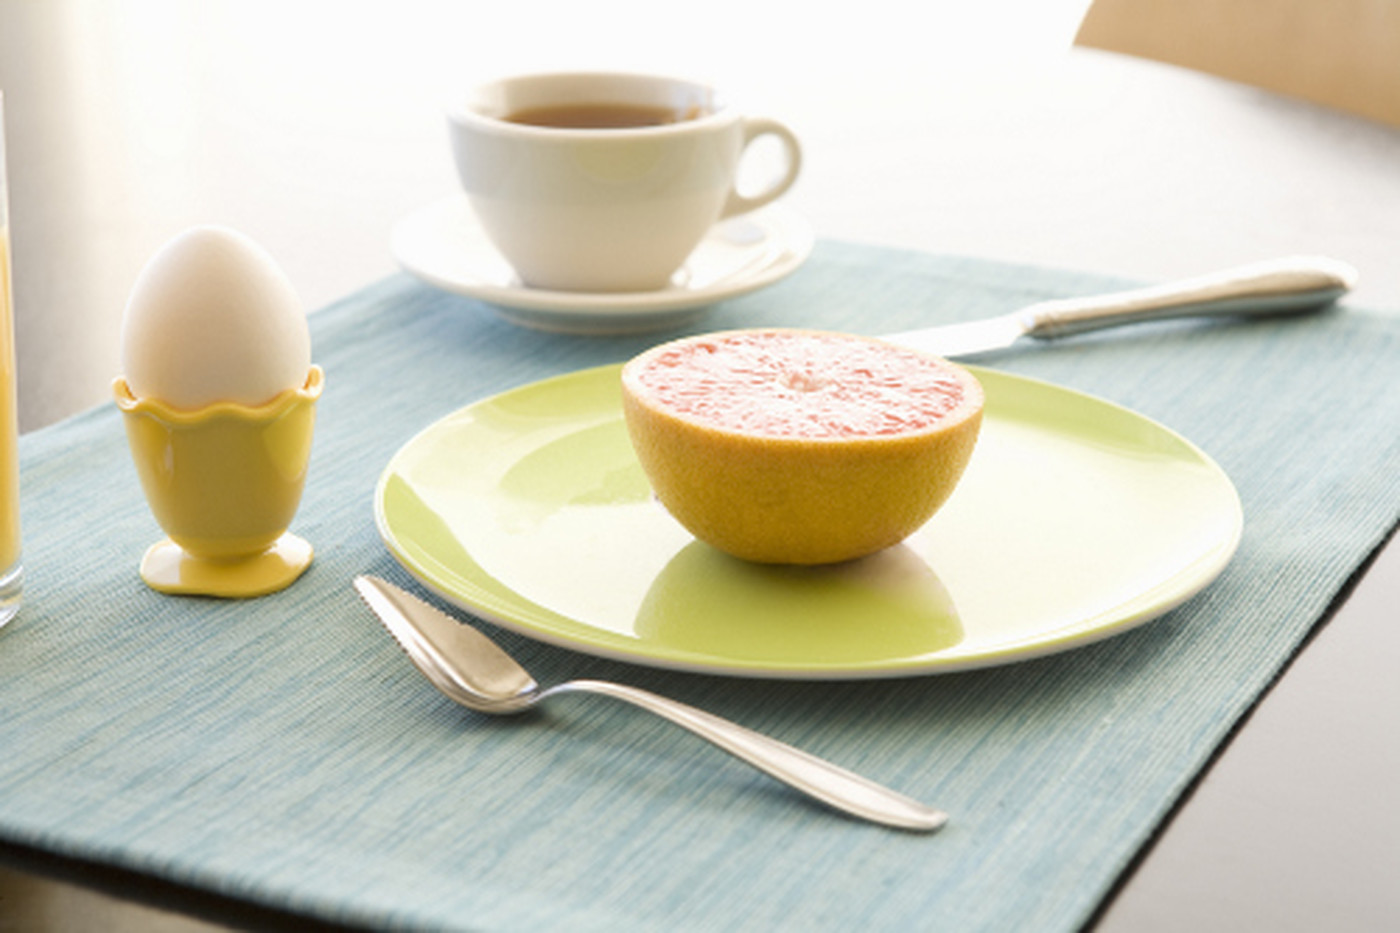 Диета Завтрак 2 Яйца Грейпфрут